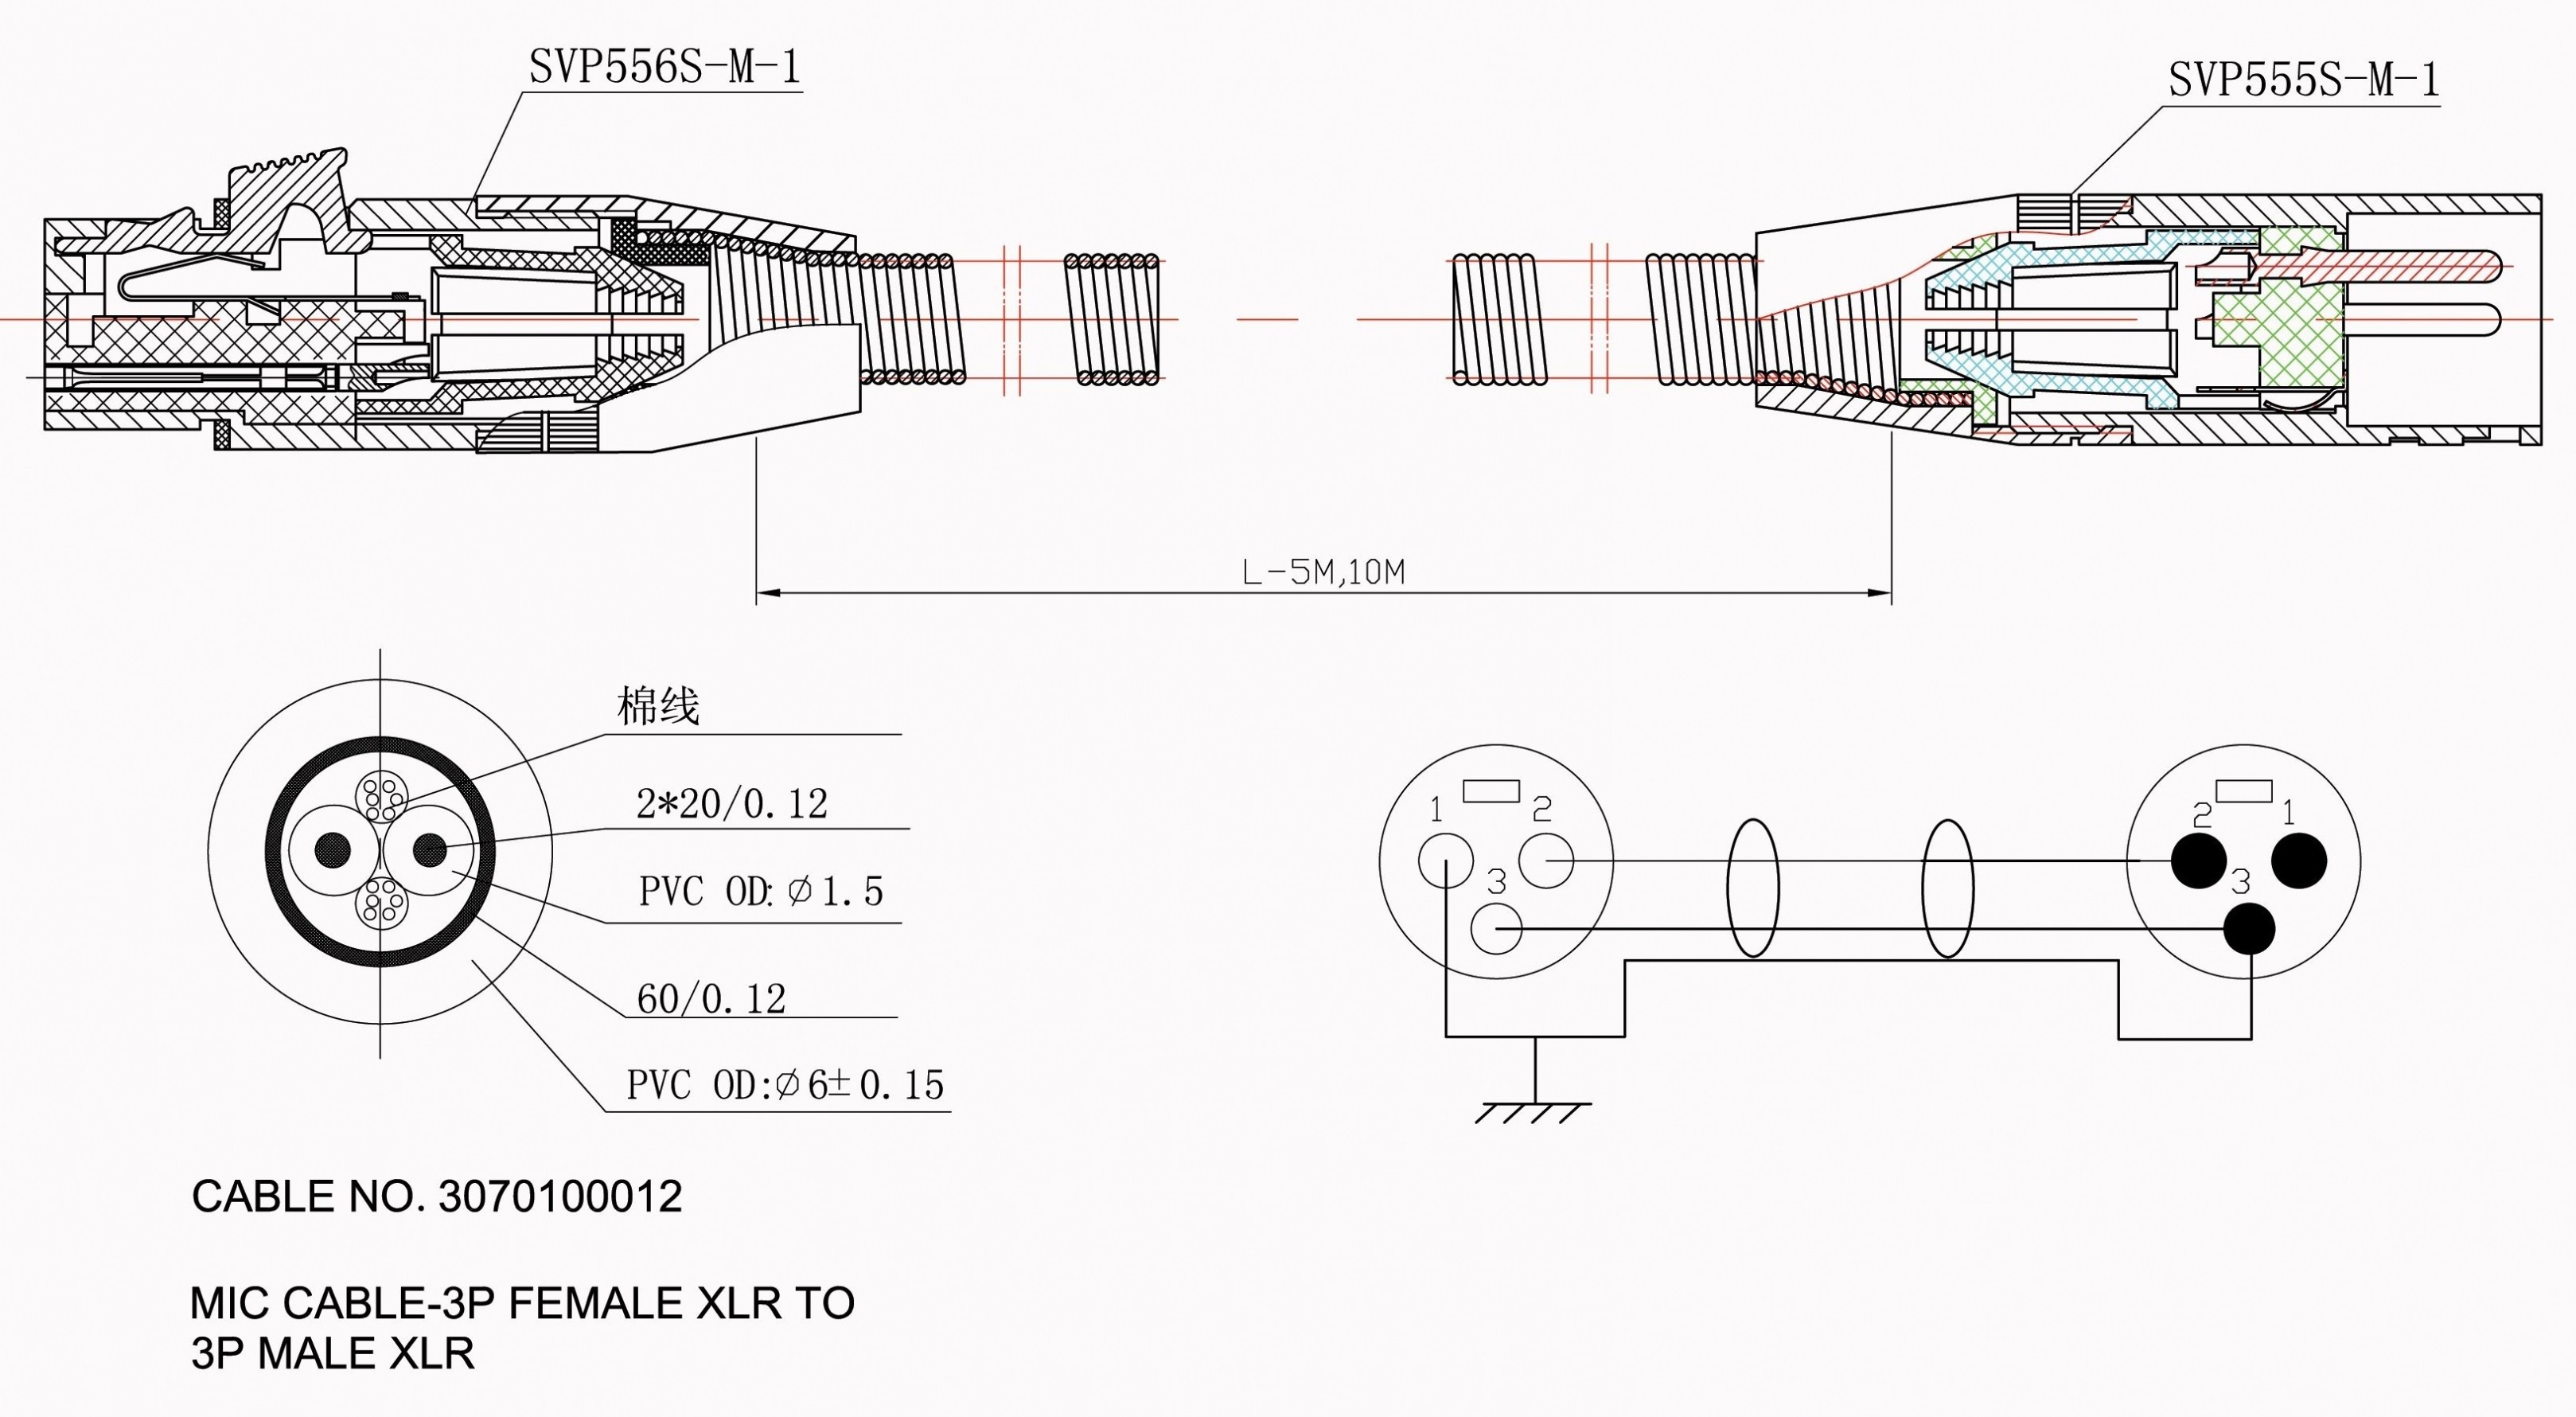 F150 Tail Light Wiring Diagram Audi A4 Tail Light Wiring Diagram Inspirationa Wiring Diagram Tail Of F150 Tail Light Wiring Diagram